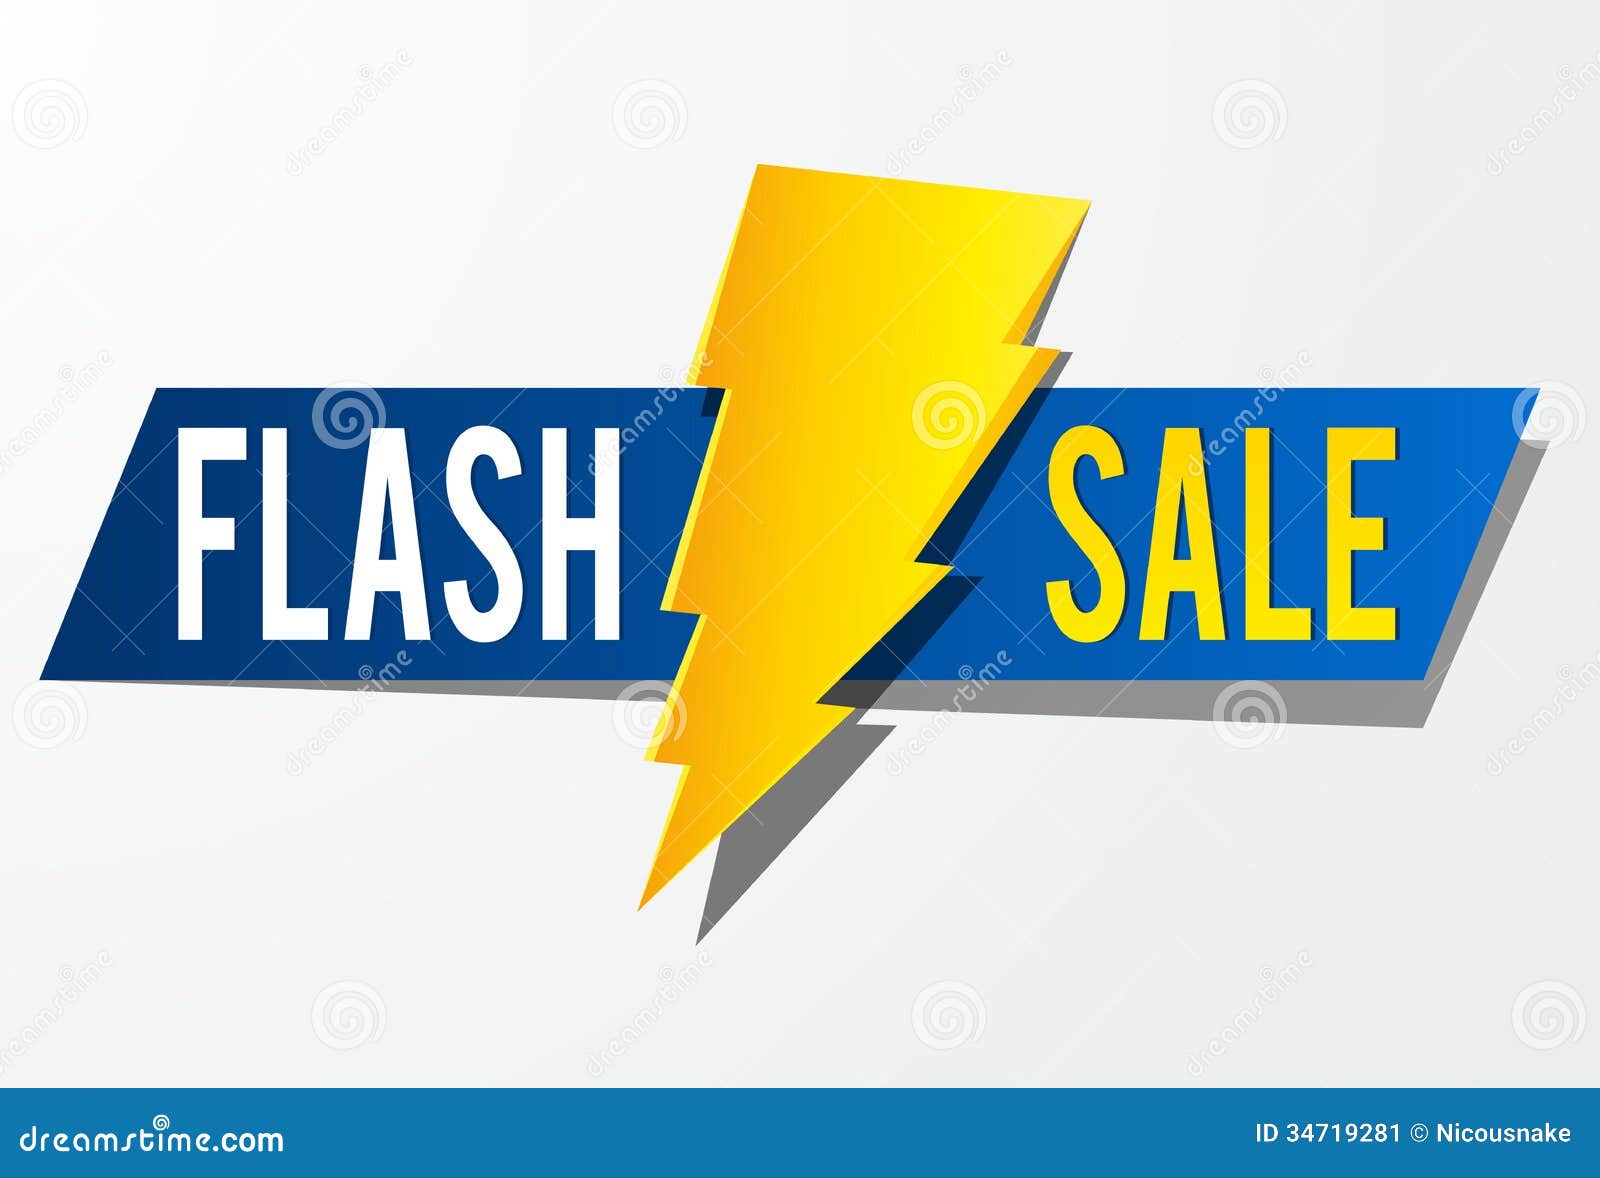 free flash clipart graphics - photo #47